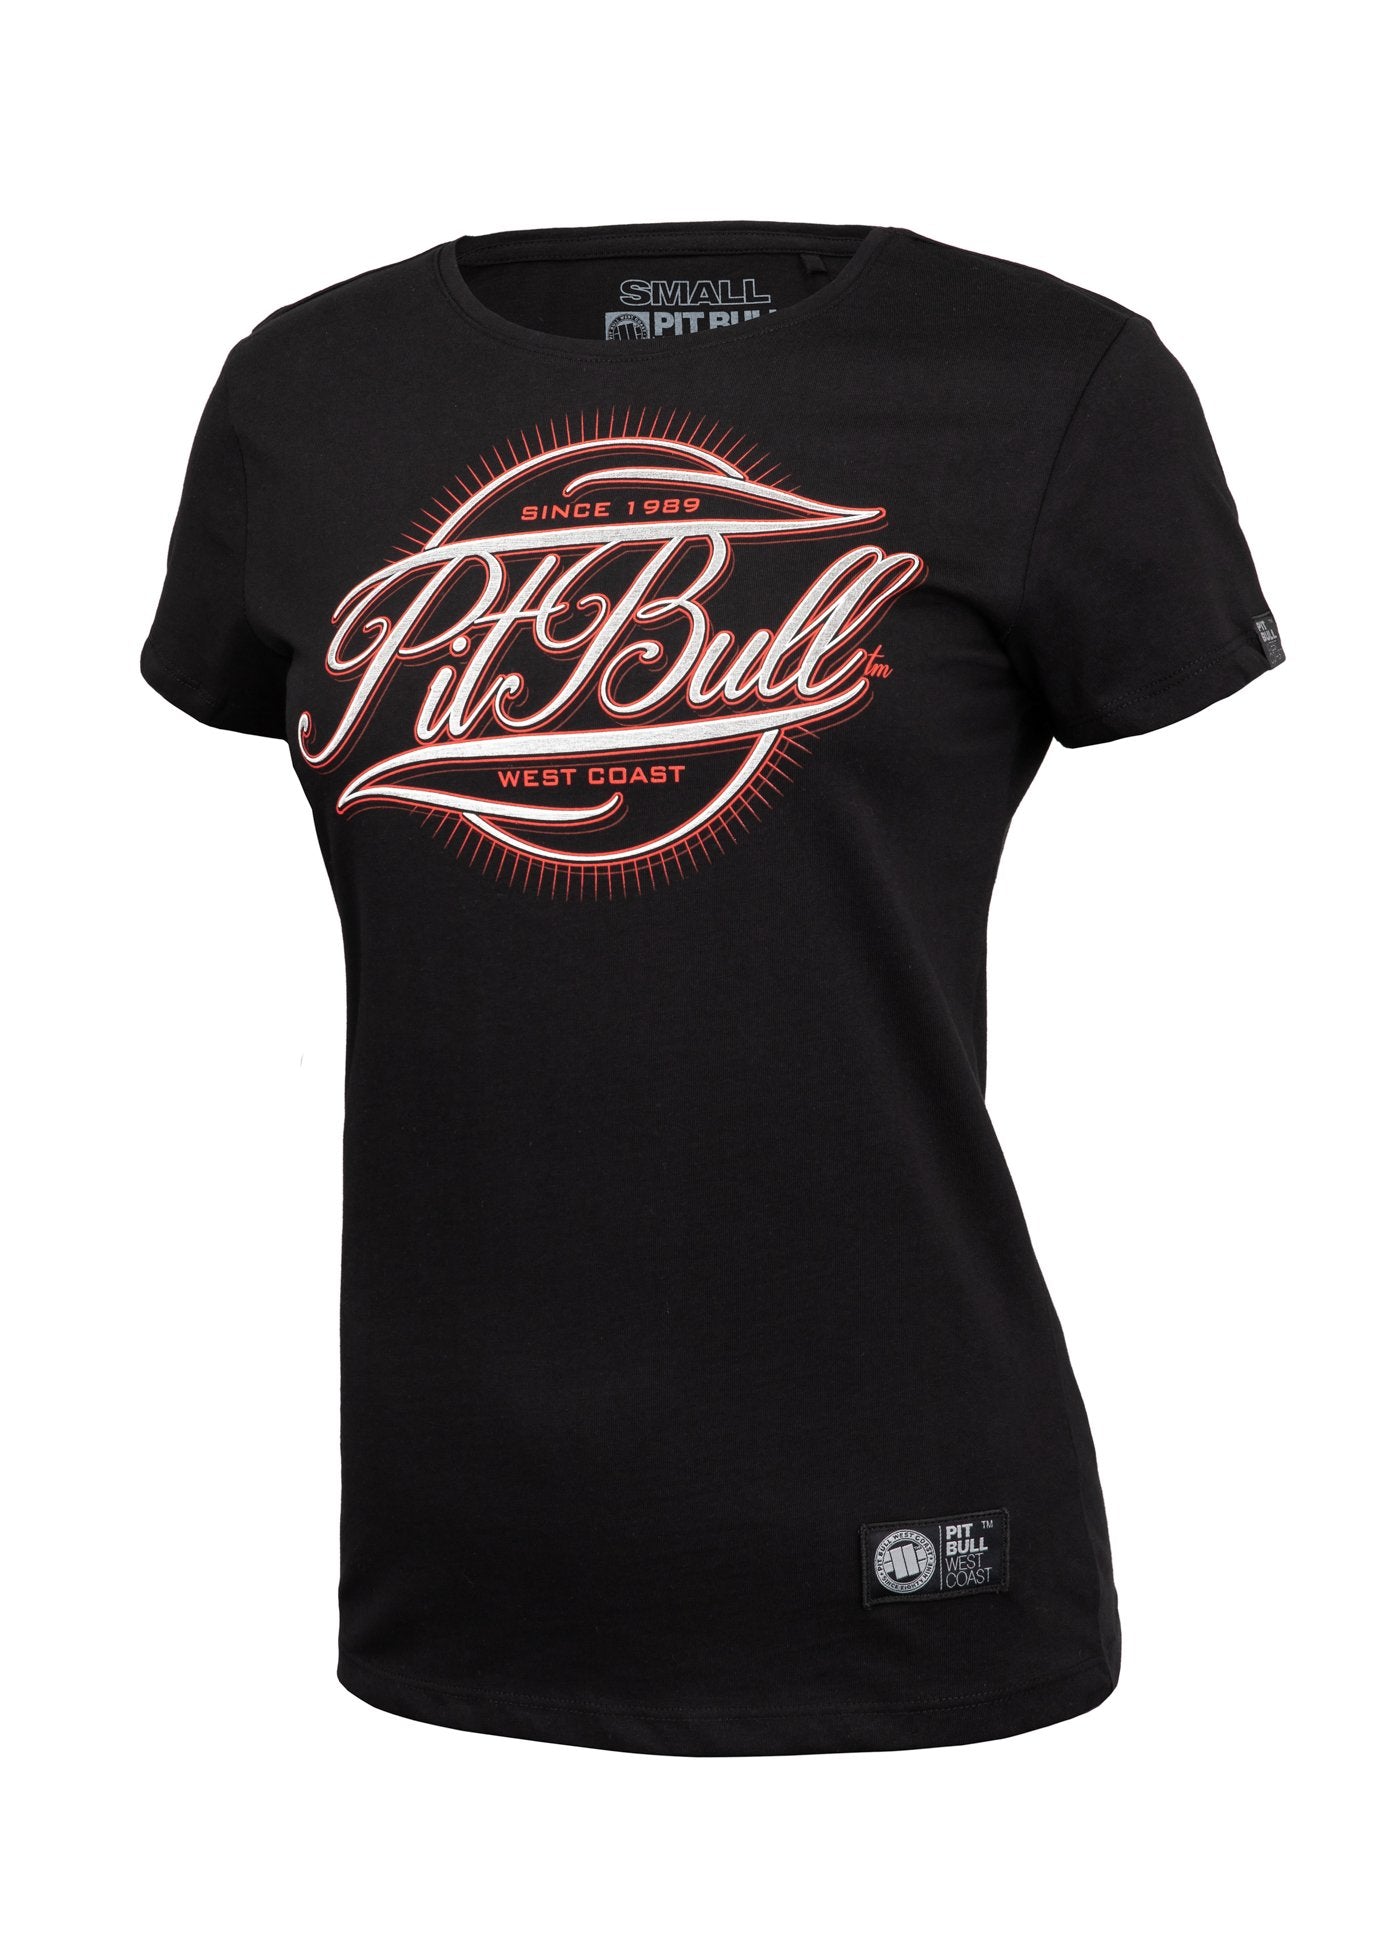 Women's T-shirt PITBULL IR Black - pitbullwestcoast